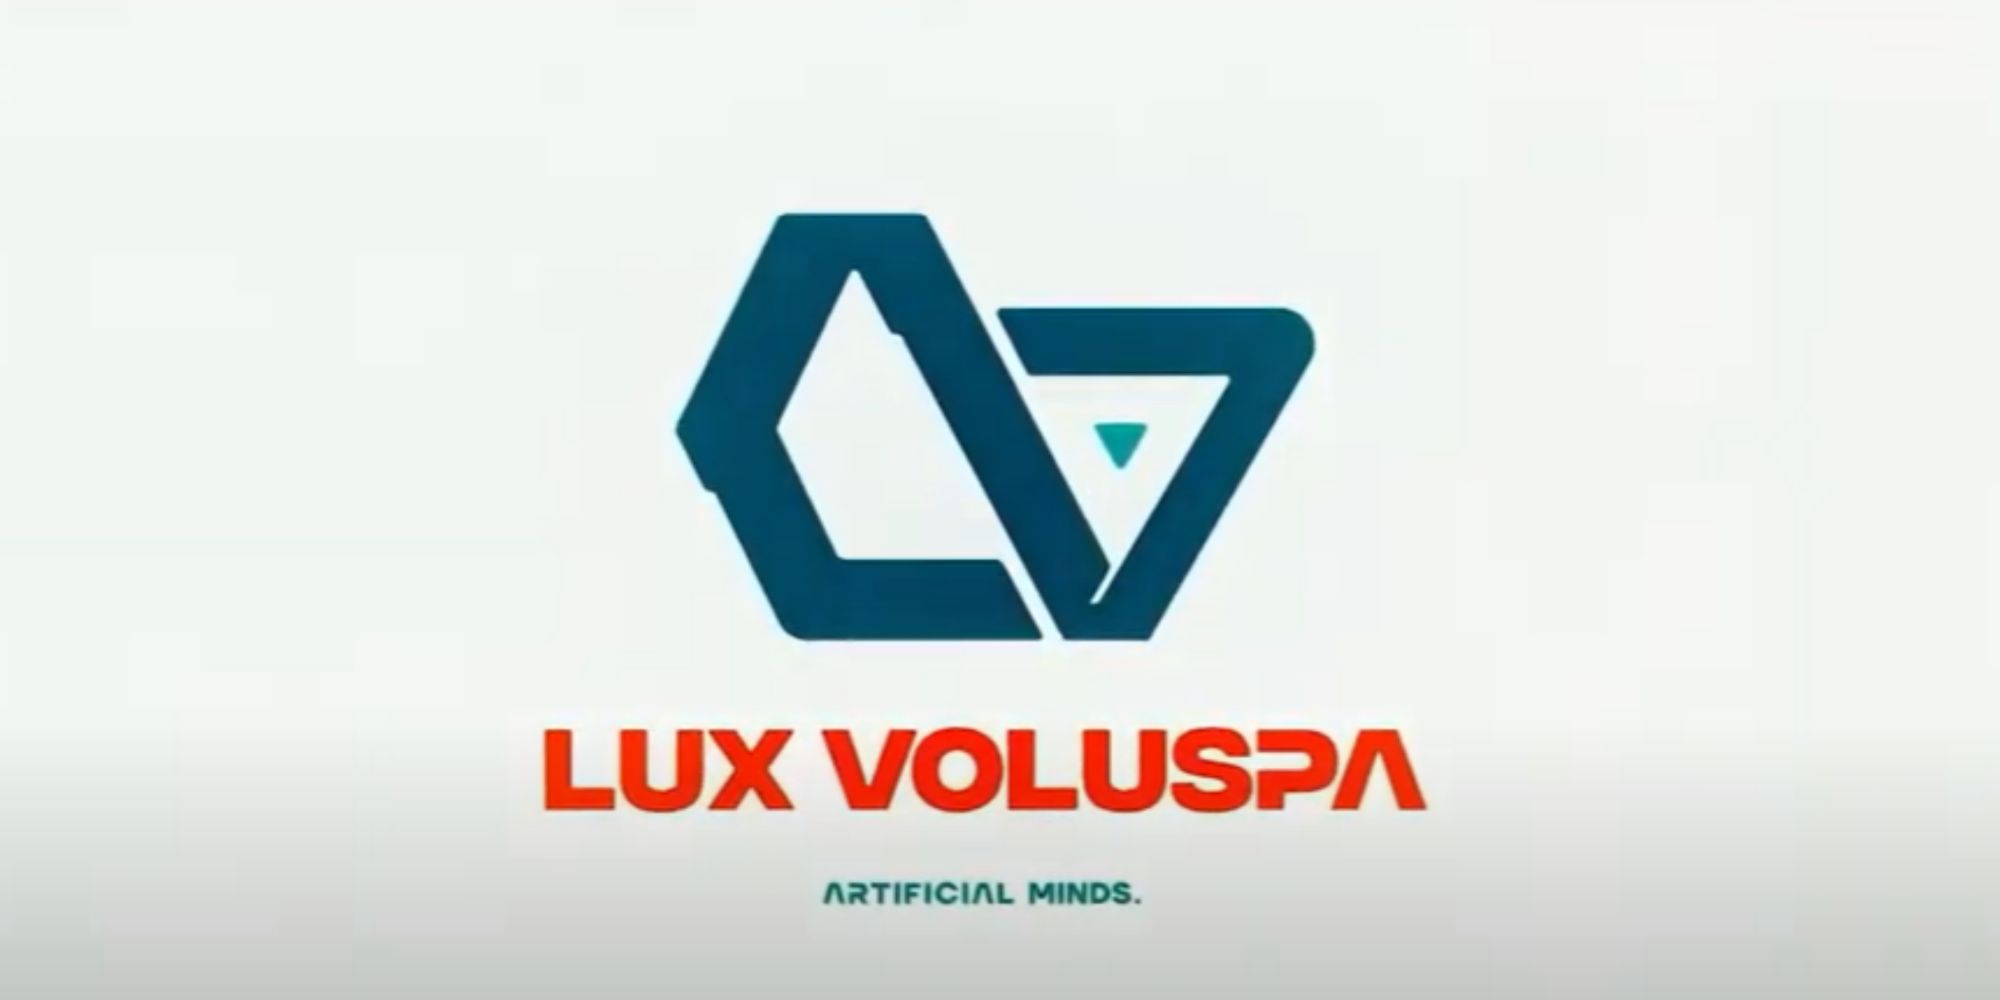 Lux Voluspa logo from Halo Infinite livestream